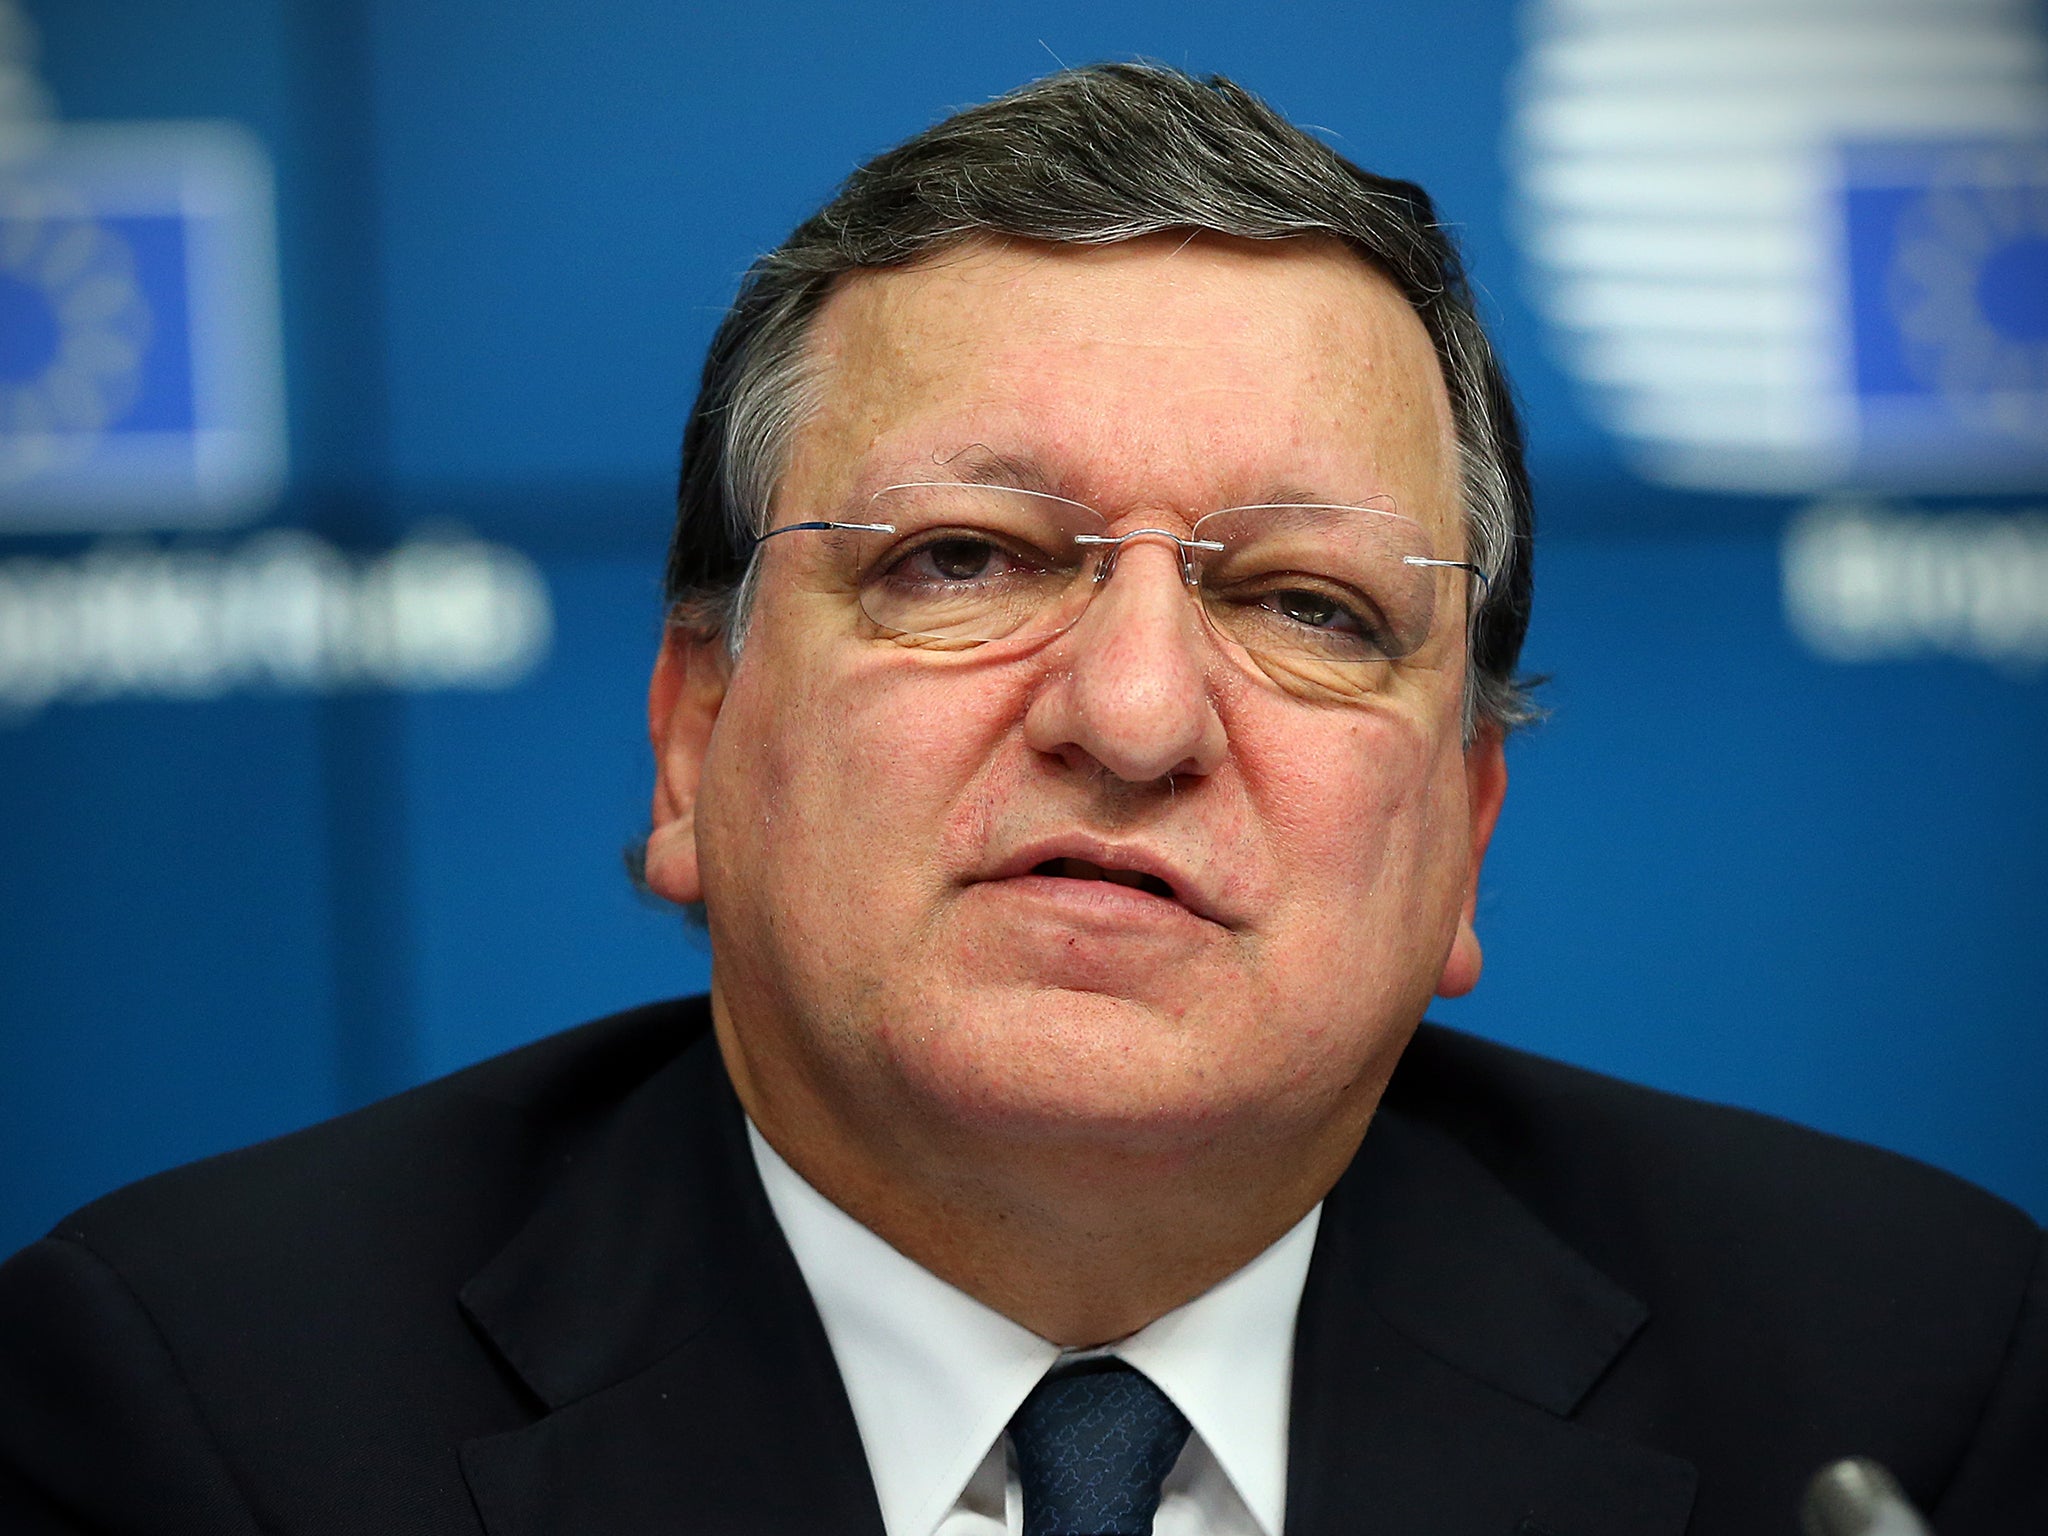 Jose Manuel Barroso has hit back at the Prime Minister